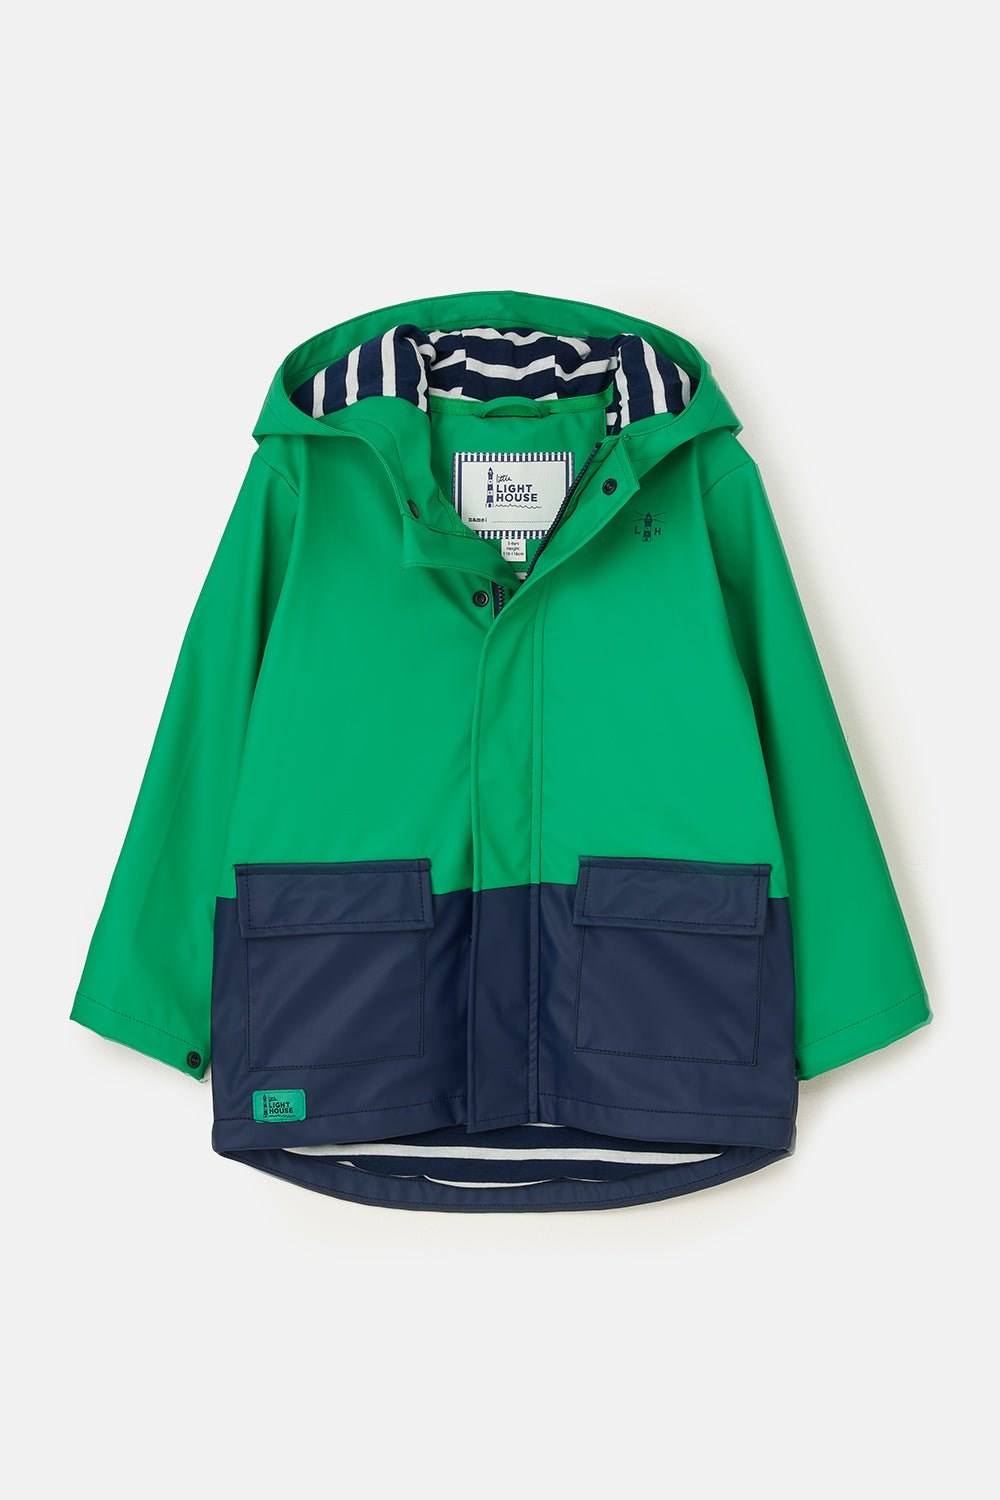 Anchor Kids Waterproof Jacket -